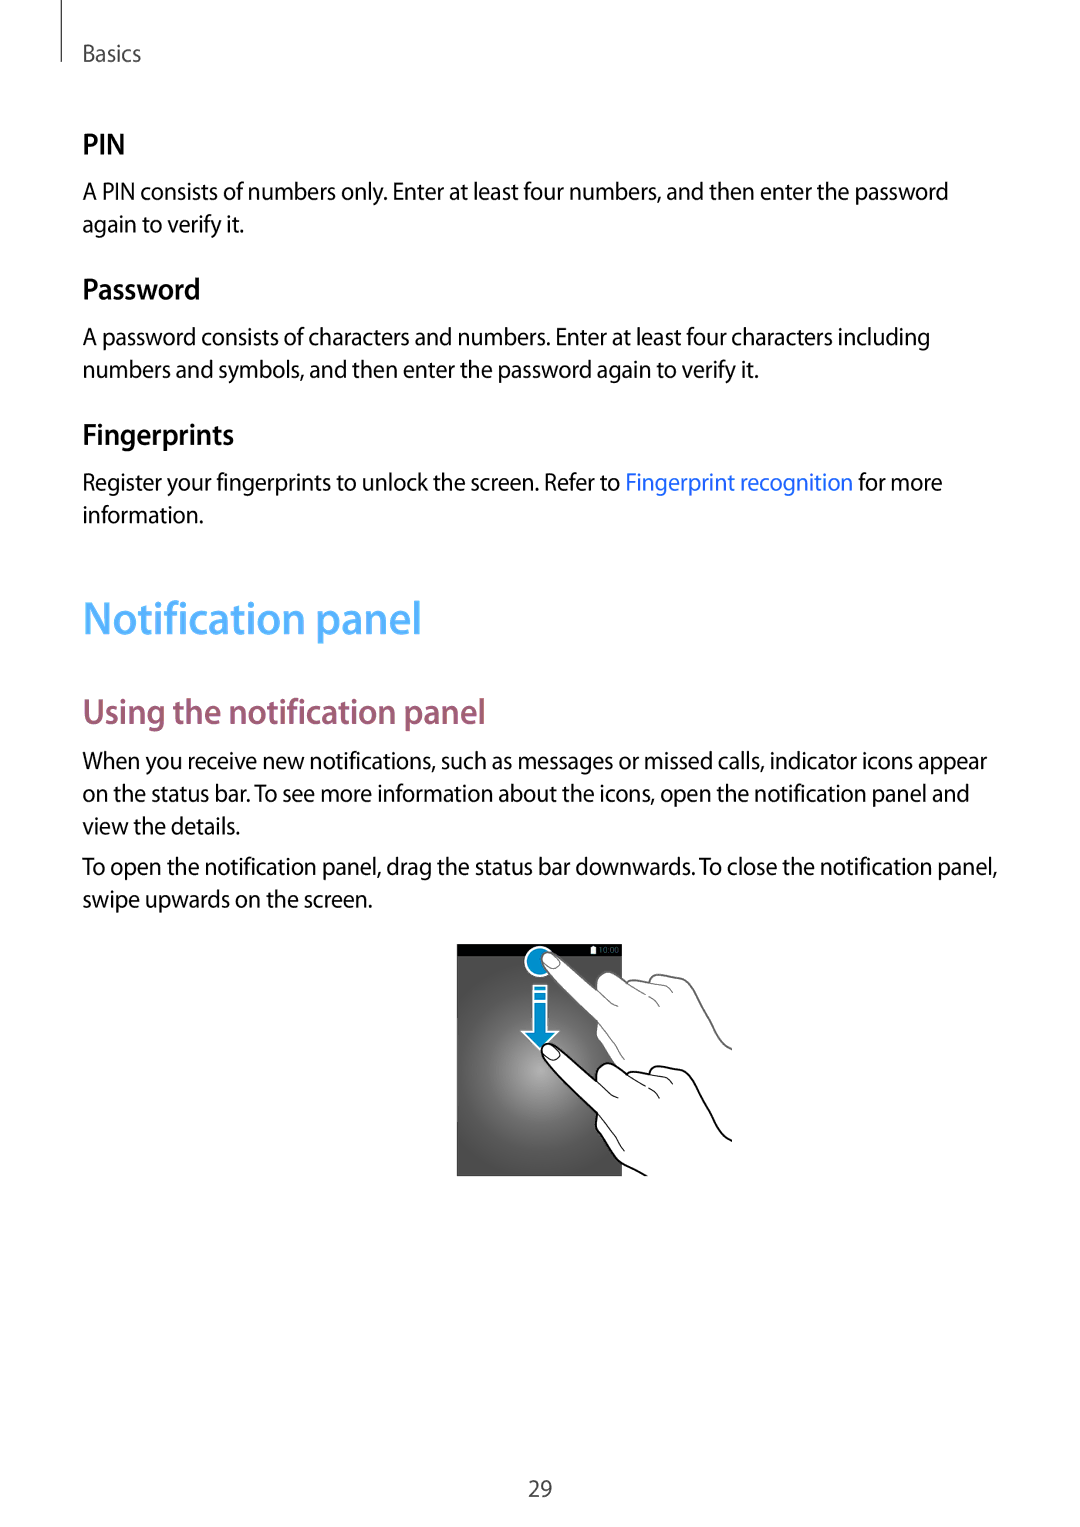 Samsung SM-A510FZKAILO manual Notification panel, Using the notification panel, Password, Fingerprints 